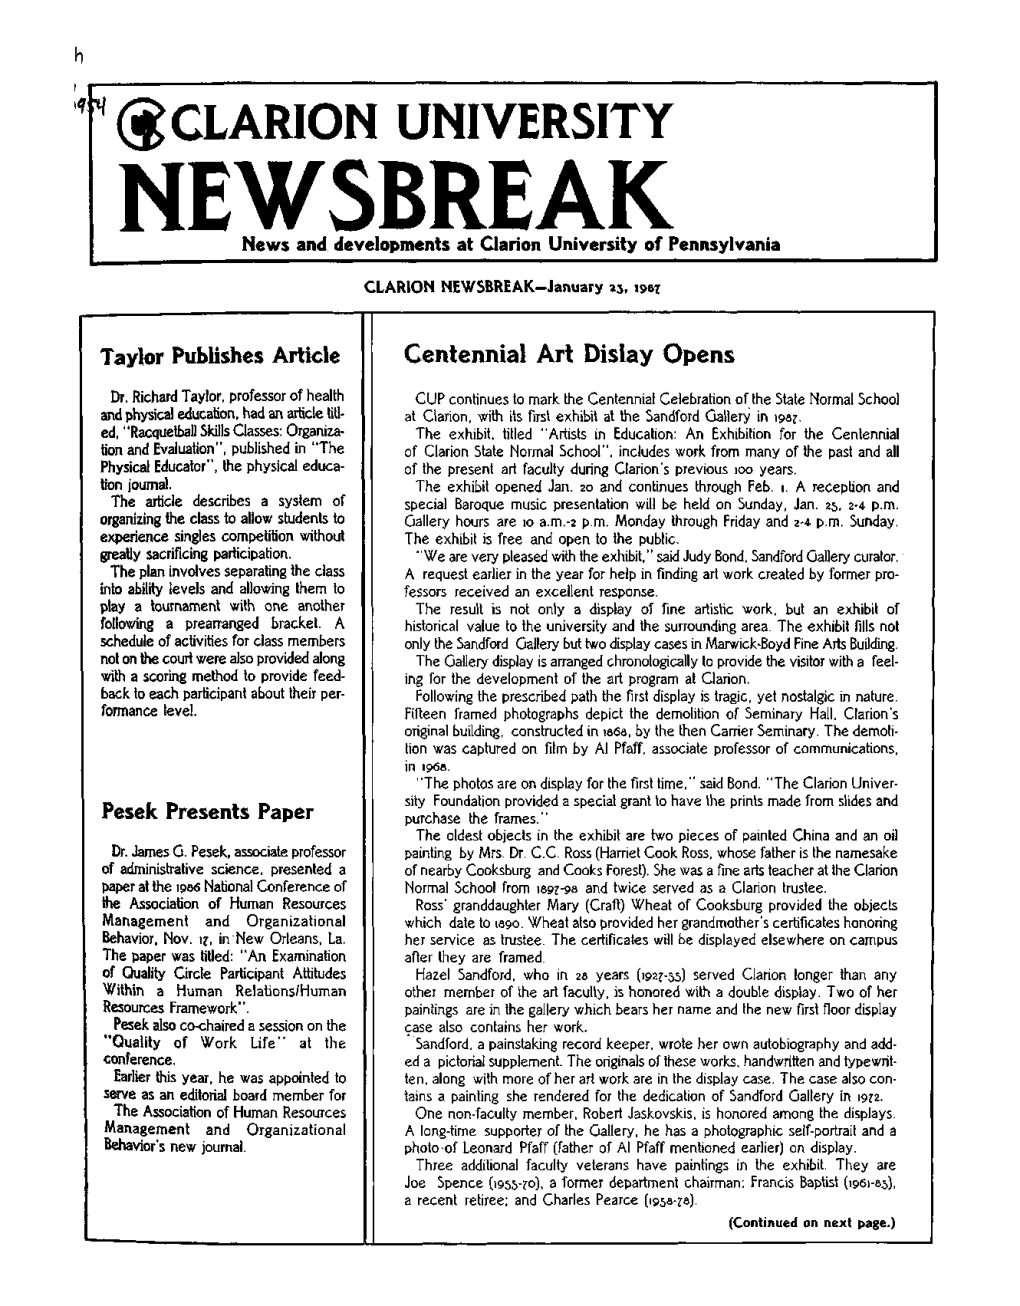 NEWSBREAK News and Developments at Clarion University of Pennsylvania